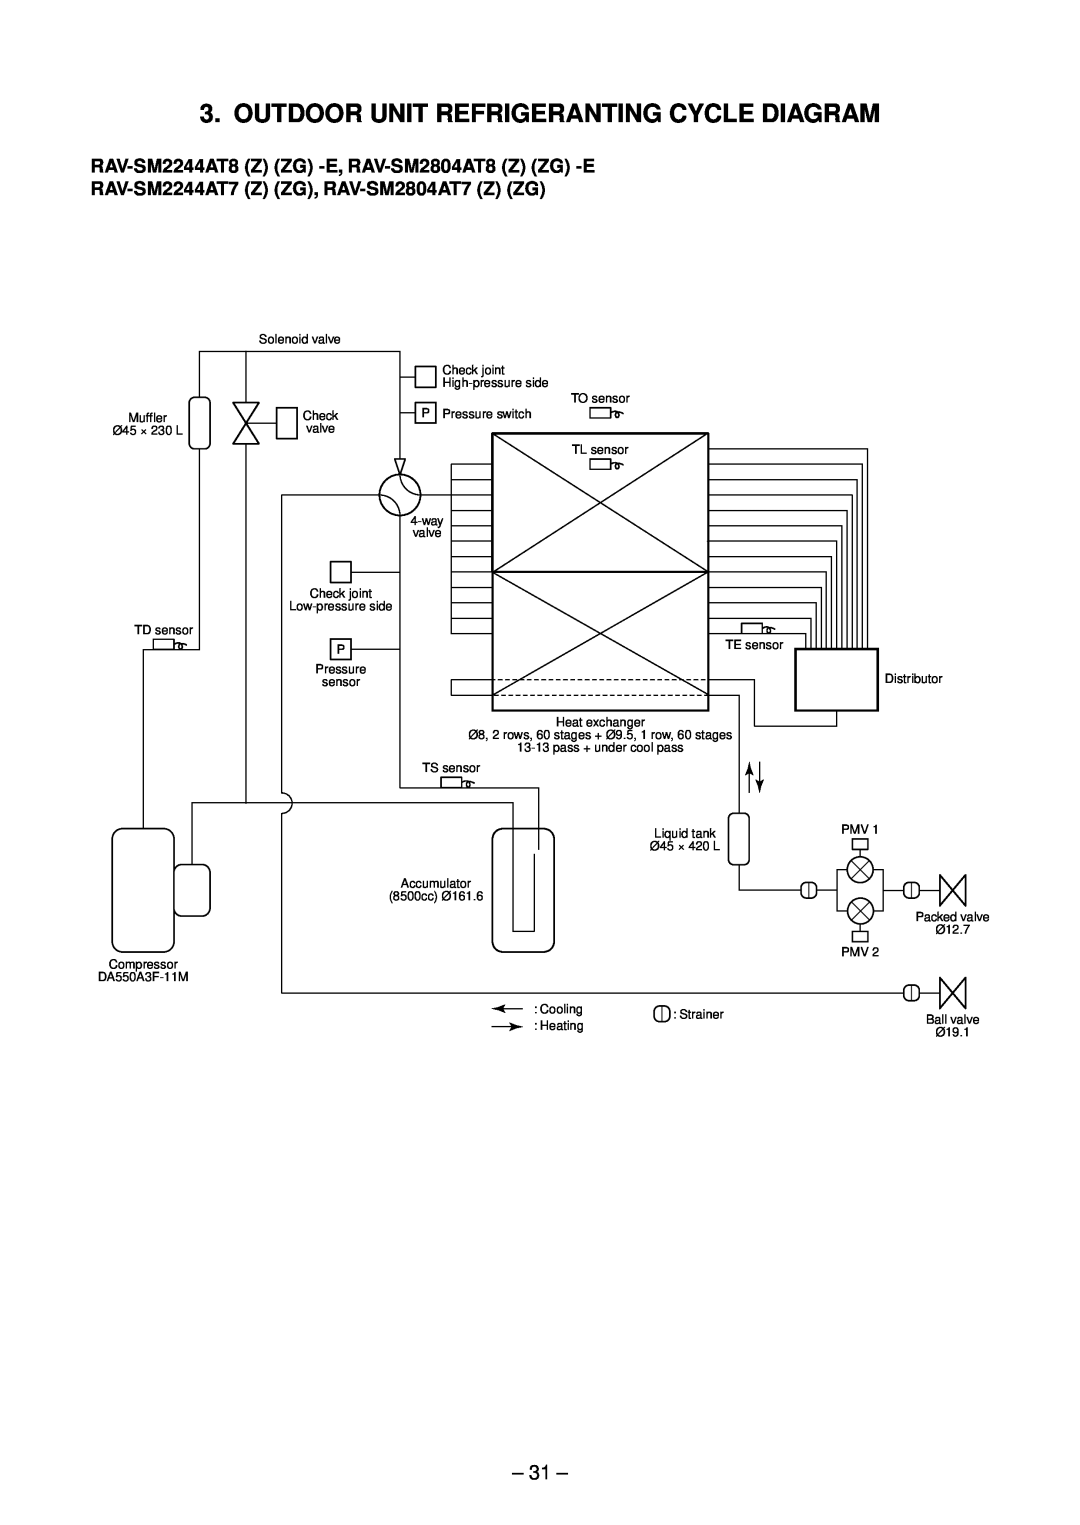 Toshiba RAV-SM2804AT7ZG Outdoor Unit Refrigeranting Cycle Diagram, 31, RAV-SM2244AT8Z ZG -E, RAV-SM2804AT8Z ZG -E 